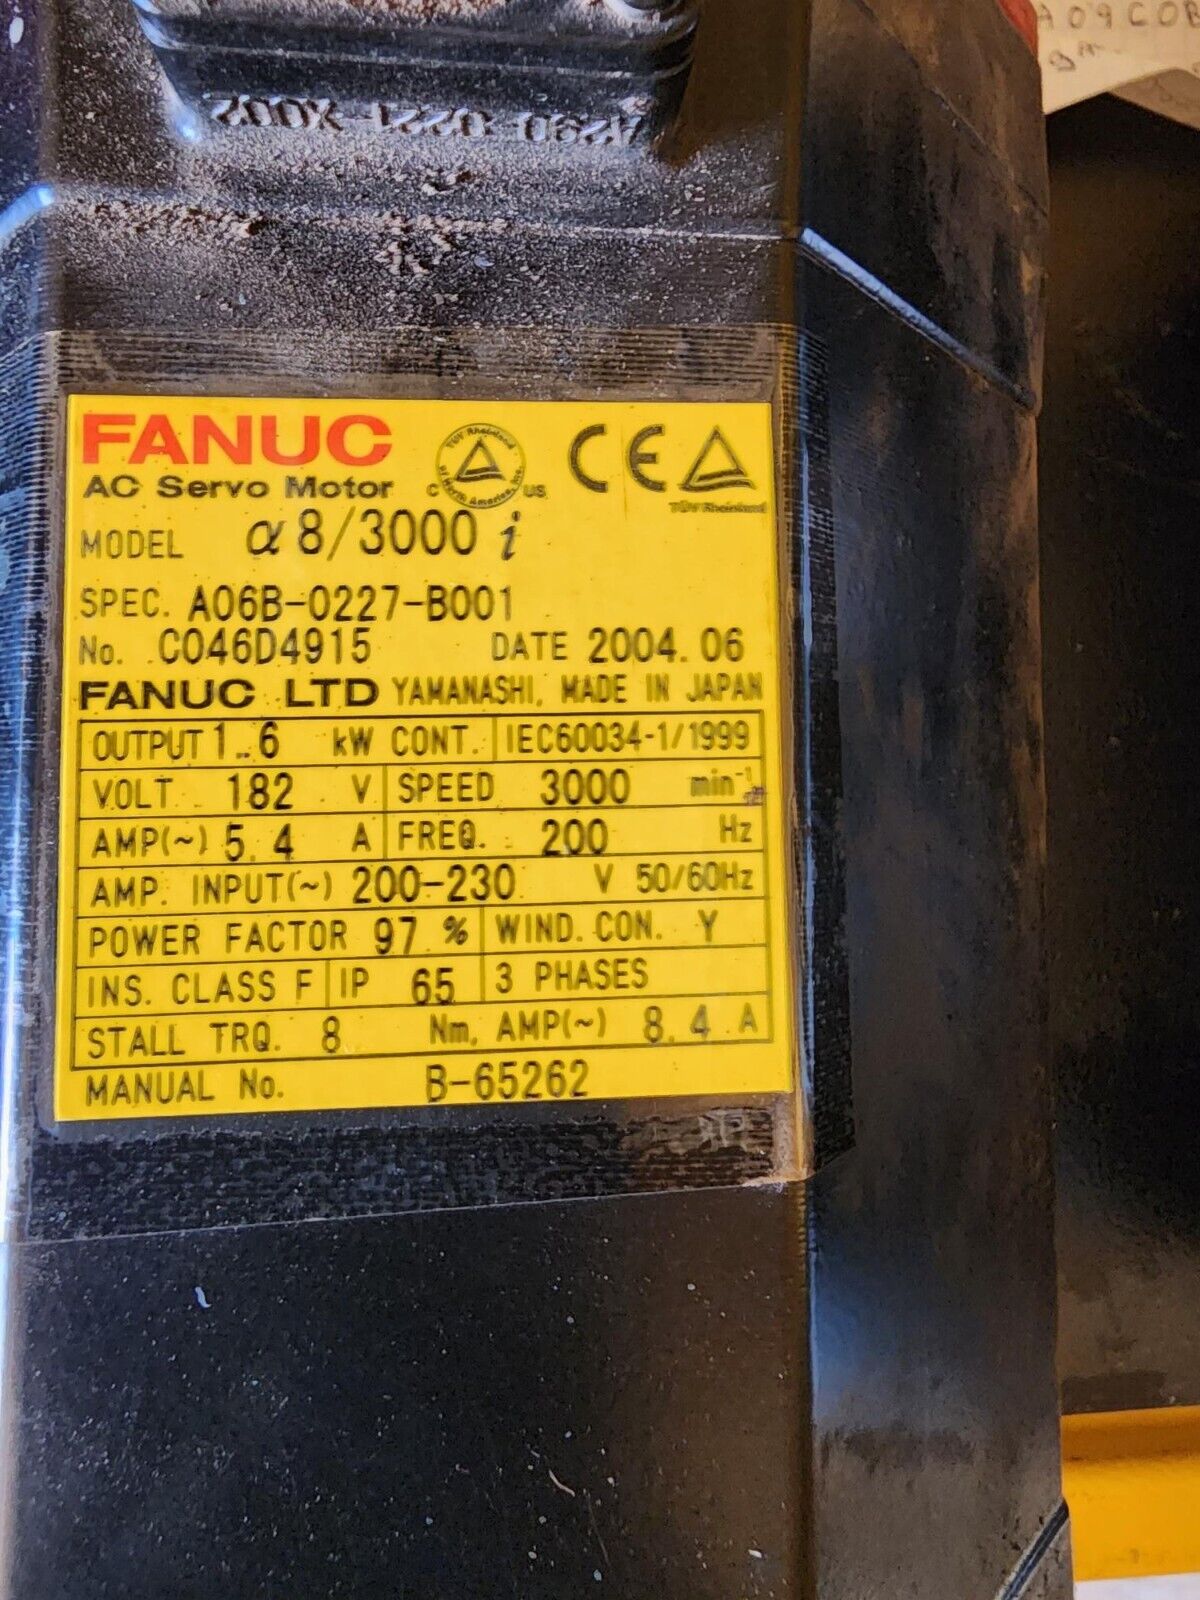 A06B-0227-B001 Fanuc Motor